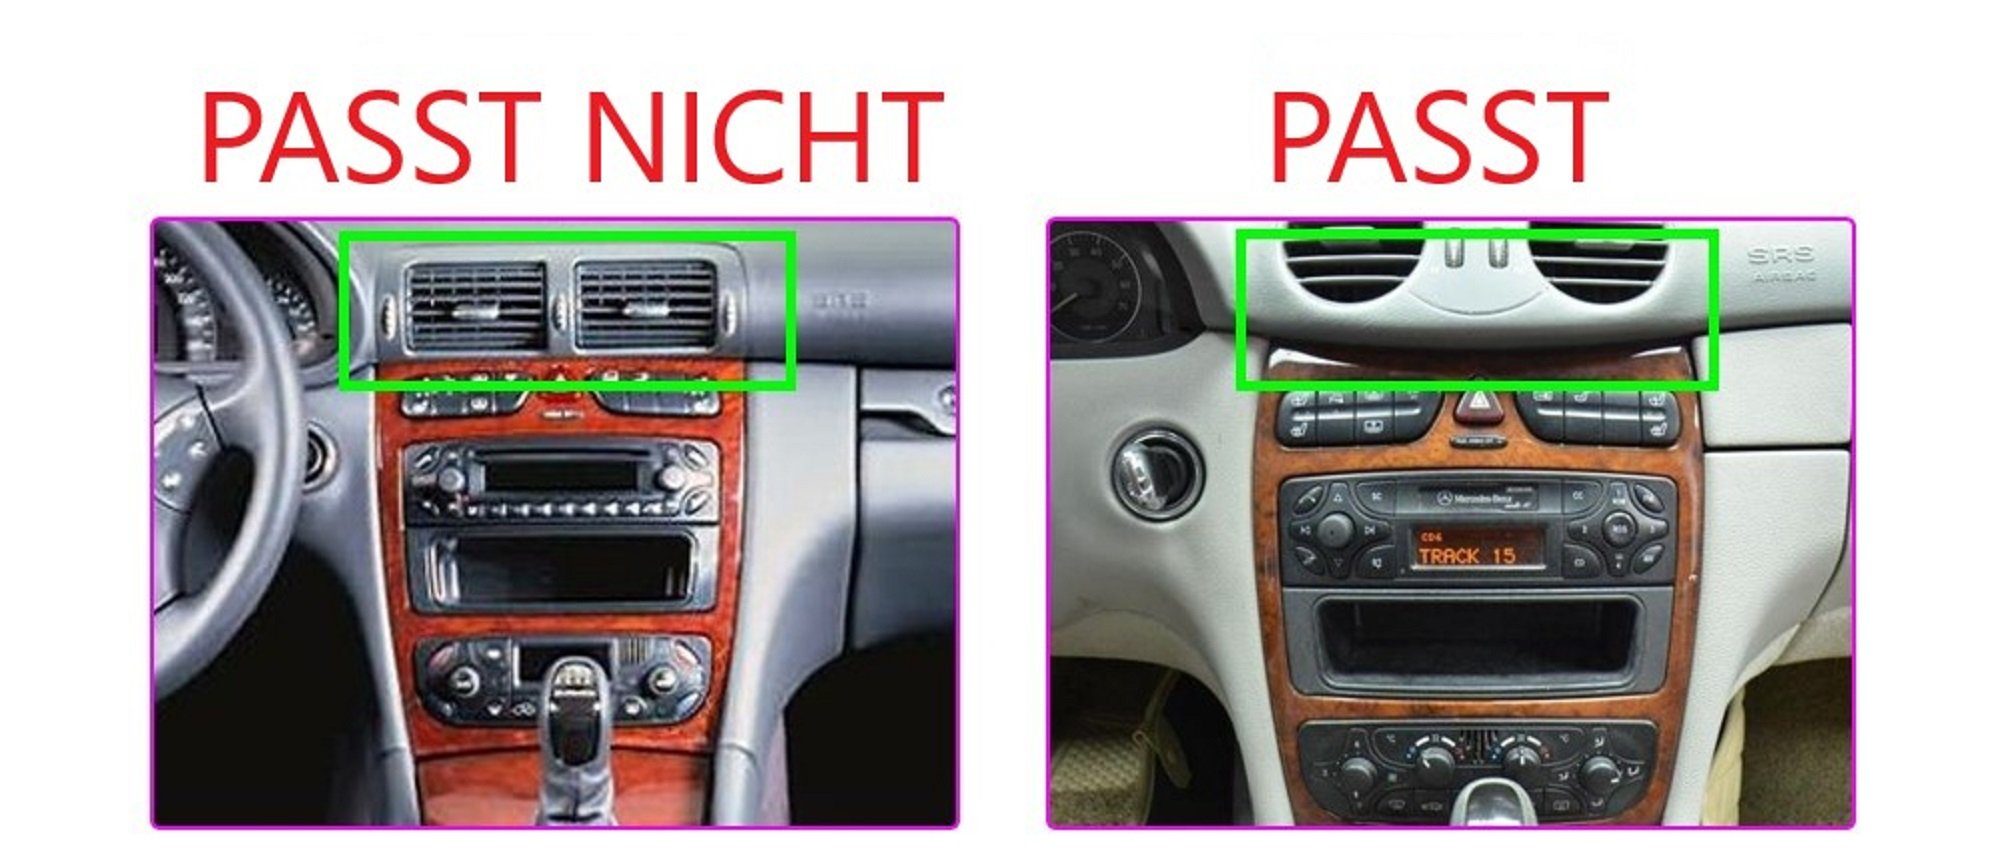 für 12 Autoradio Navi GABITECH Benz zoll 9 GPS S203 Android Mercedes BT Autoradio W203